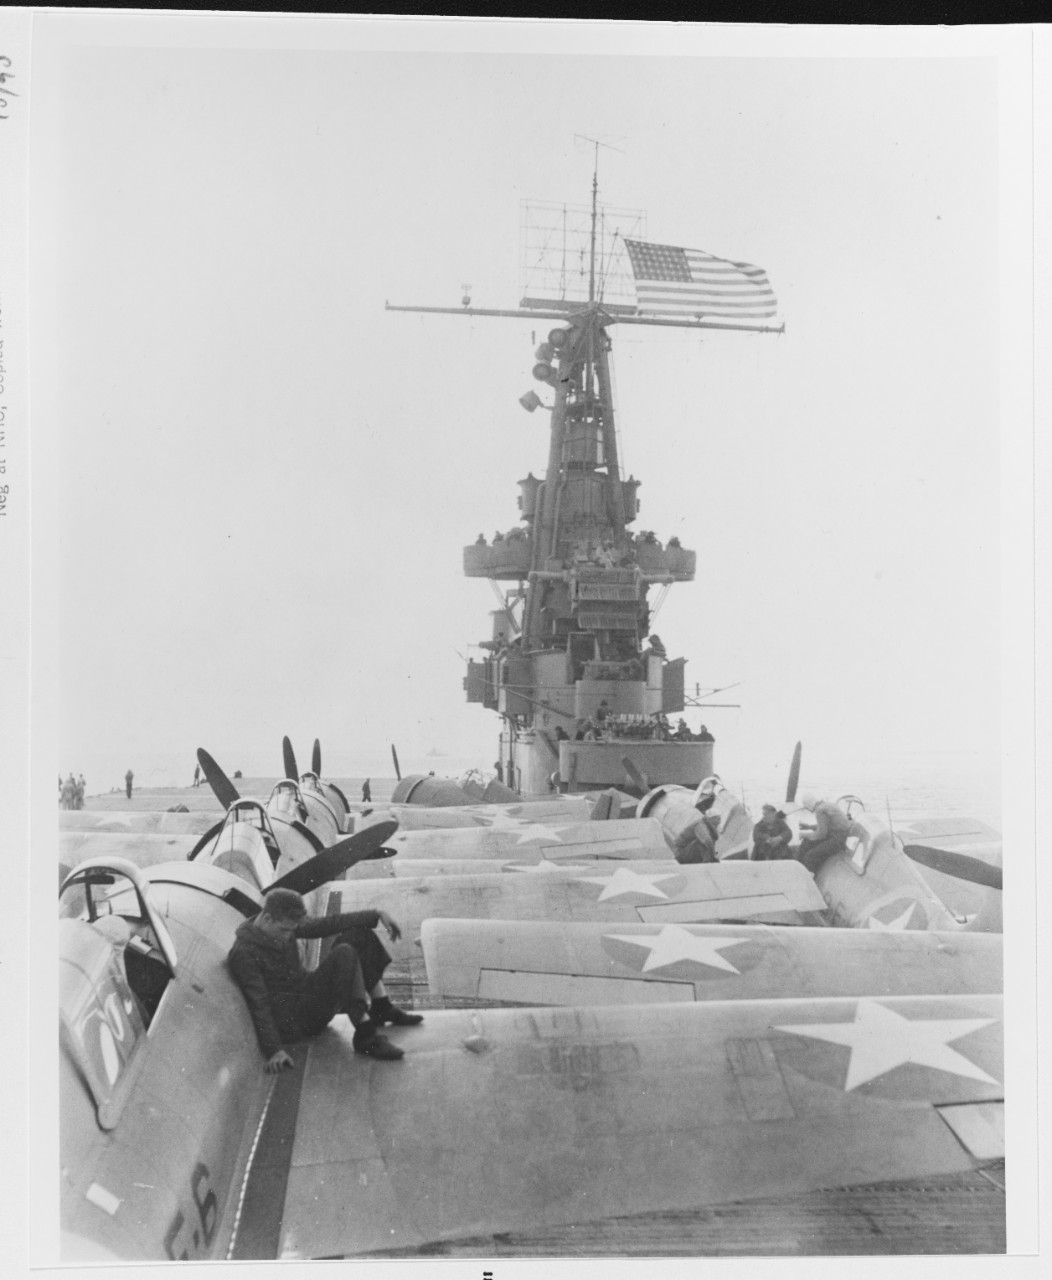 USS RANGER (CV-4)